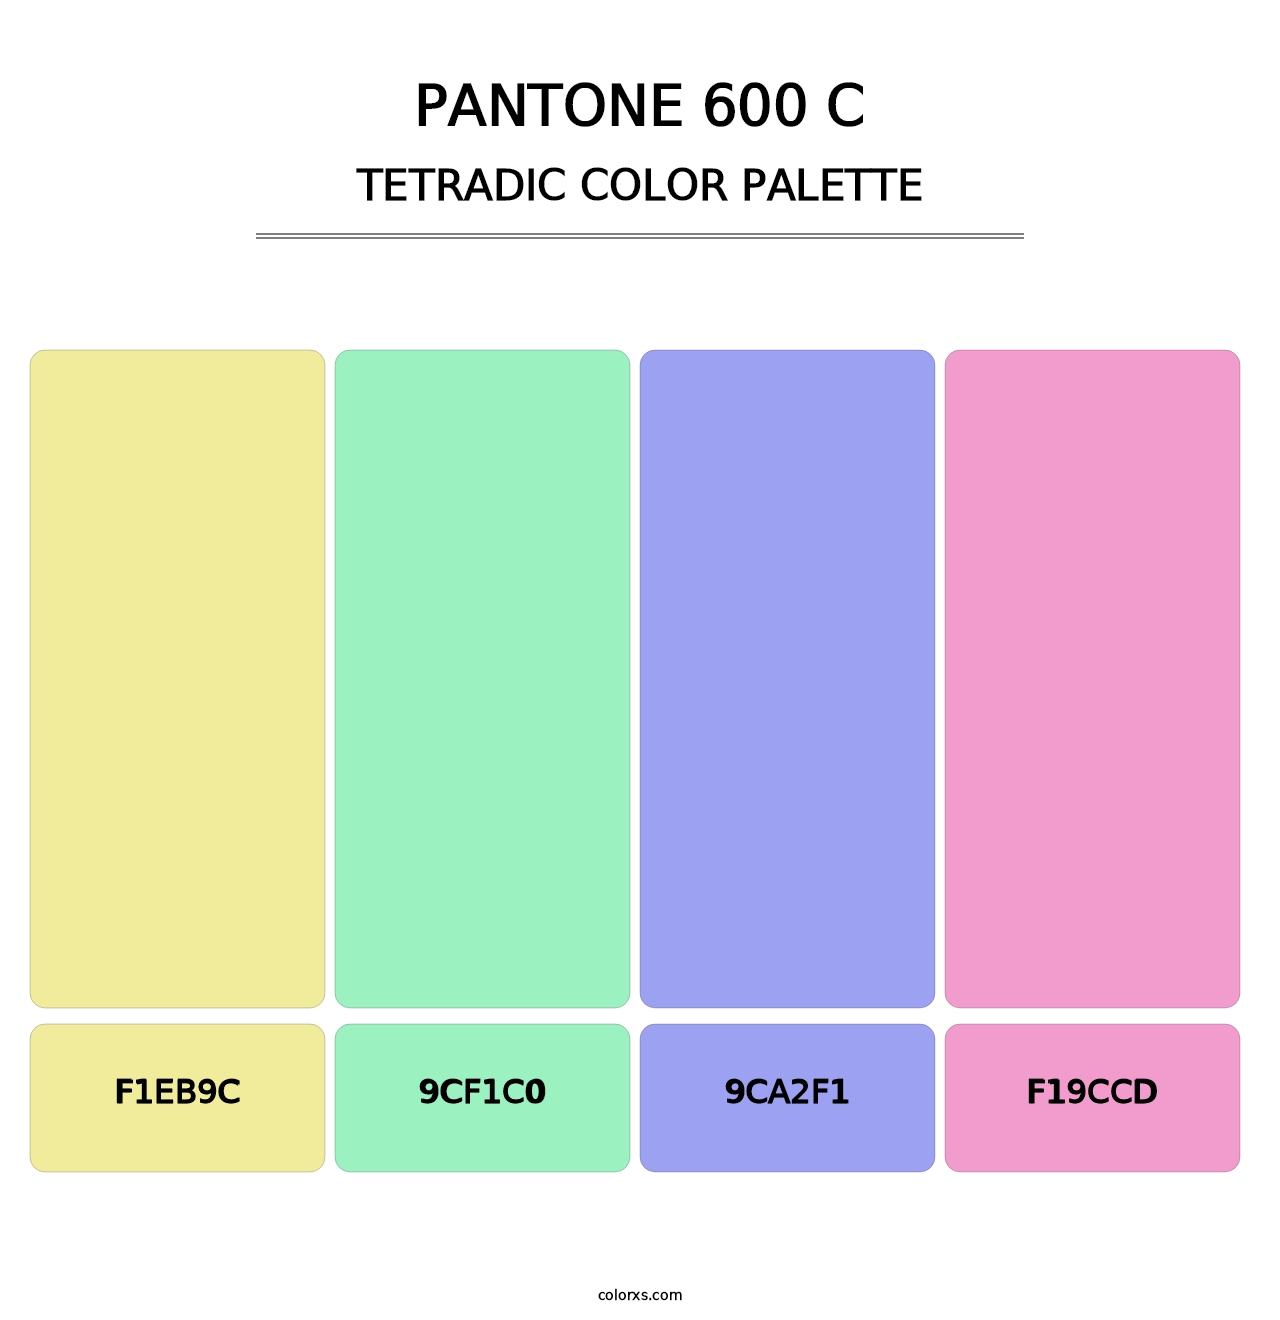 PANTONE 600 C - Tetradic Color Palette